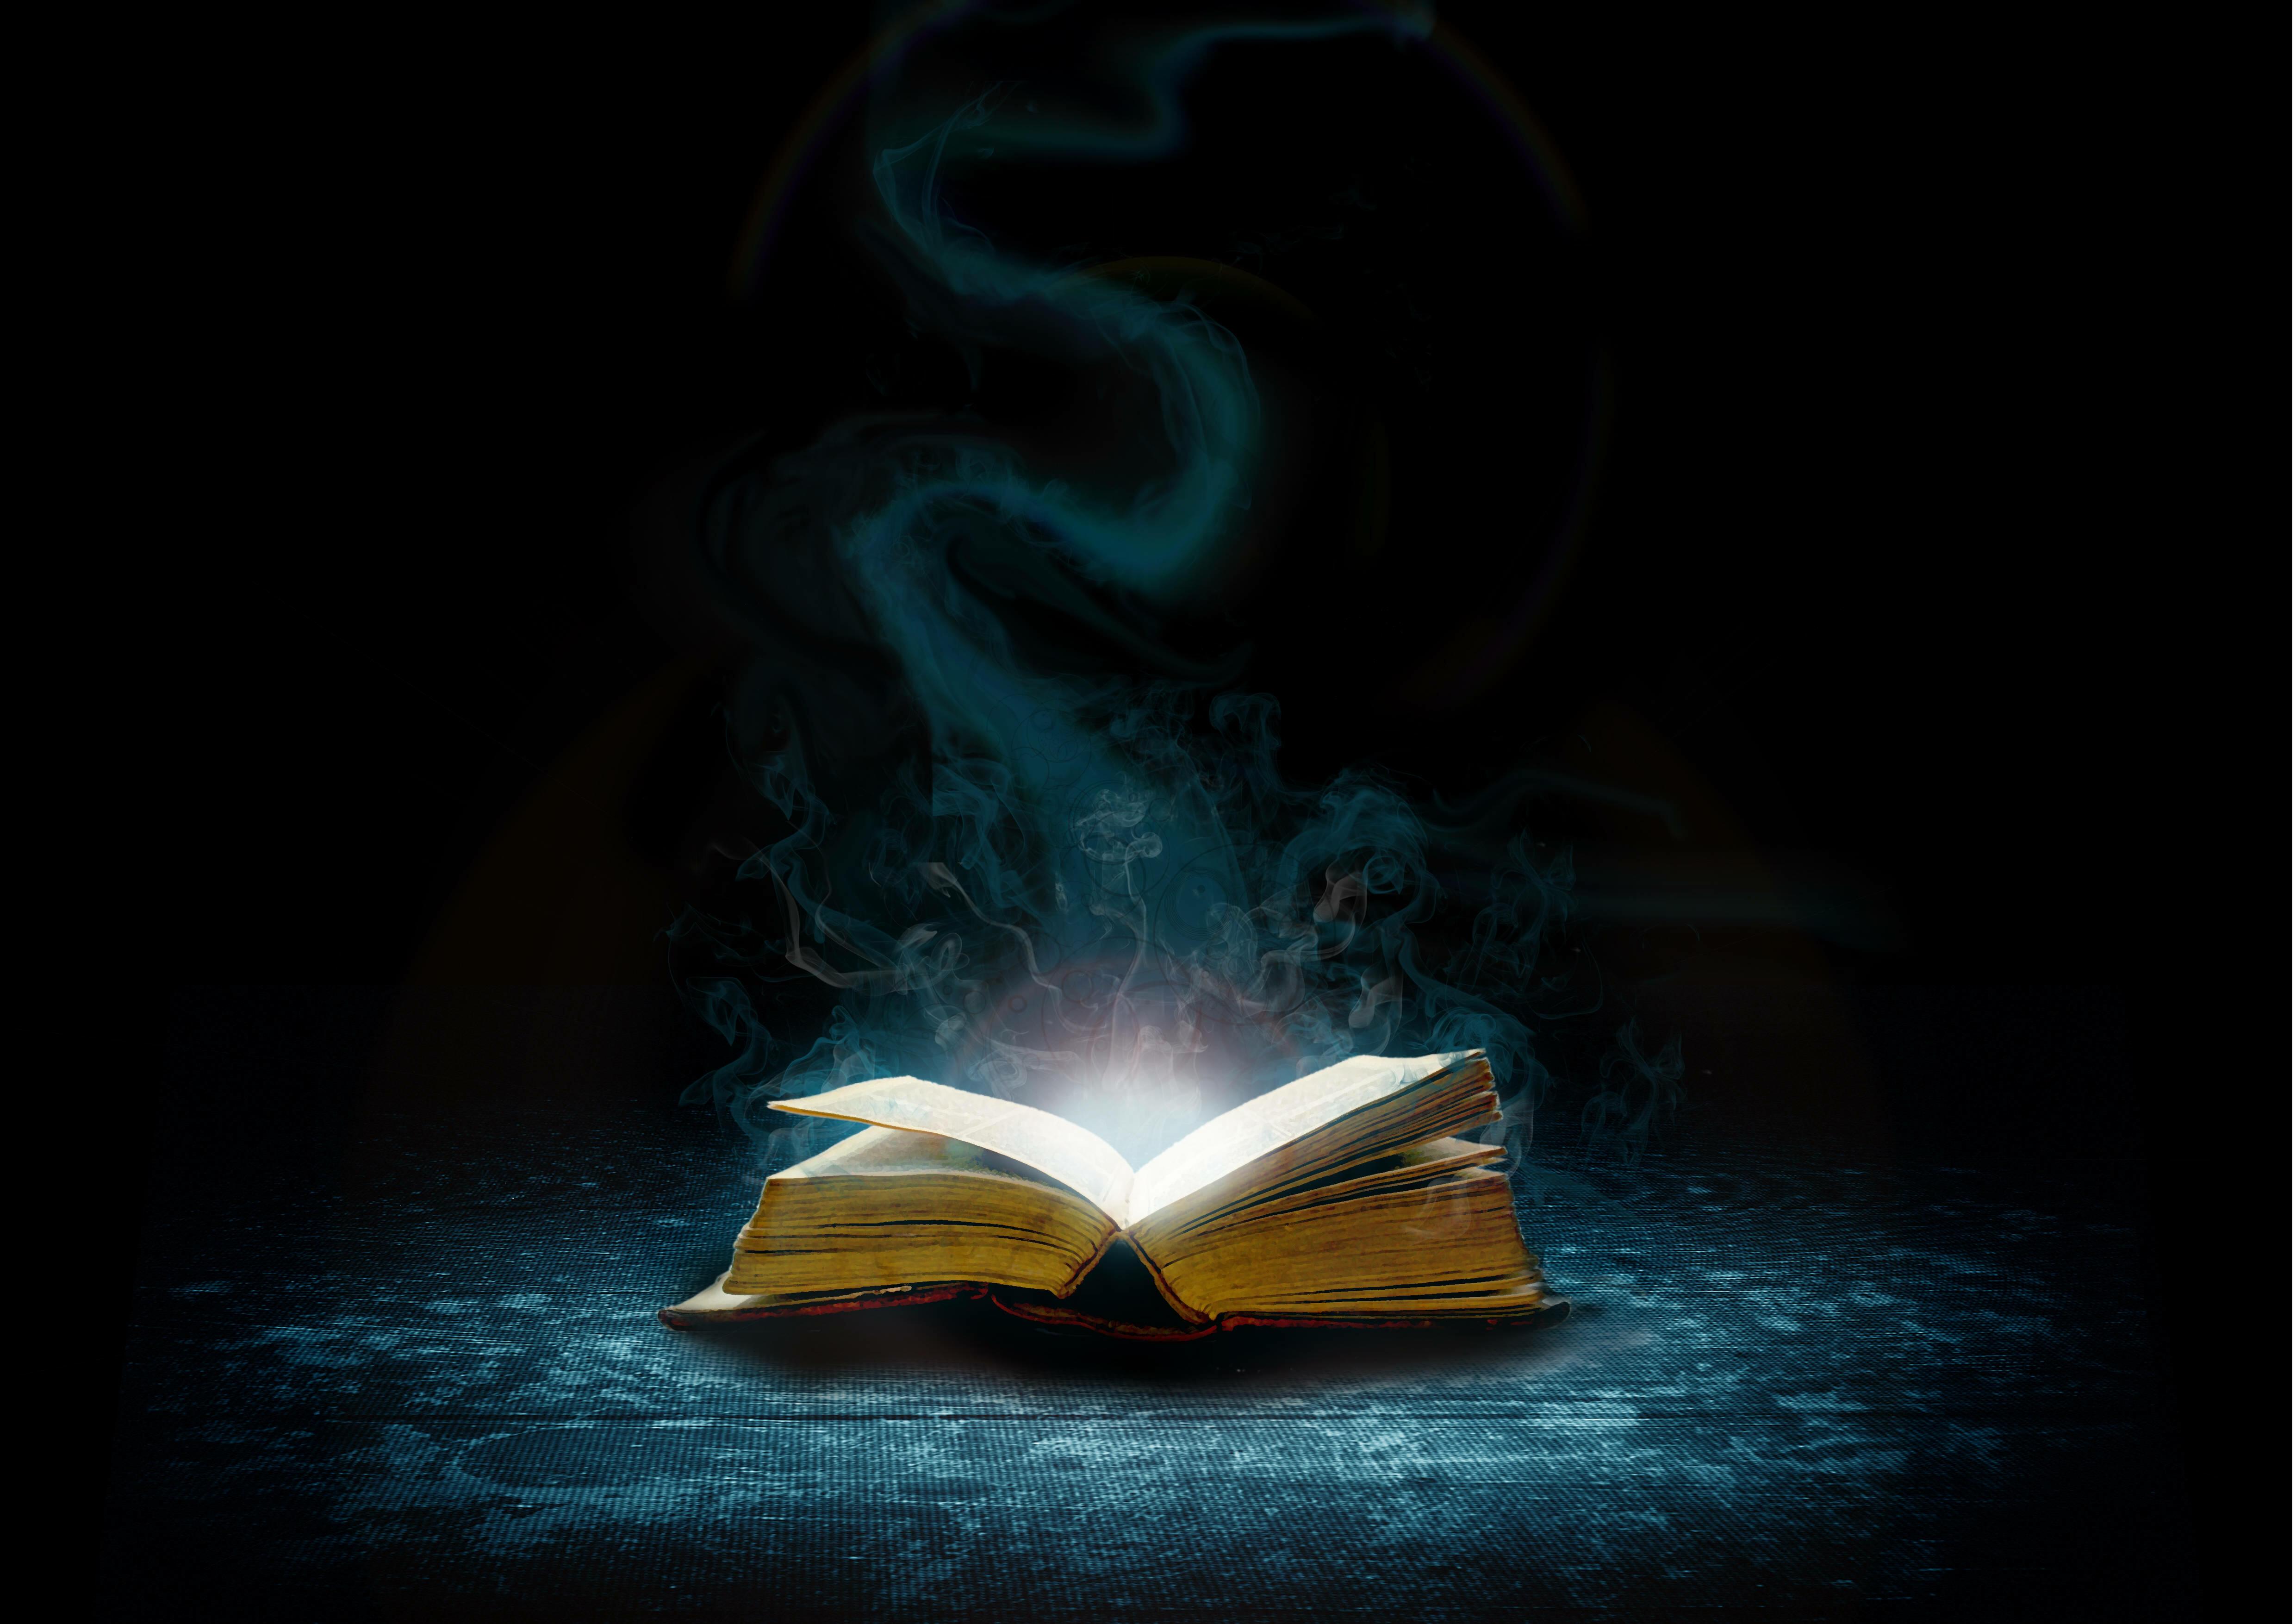 Аватарка книги. Волшебная книга. Книга волшебства. Книги на темном фоне. Книга на черном фоне.